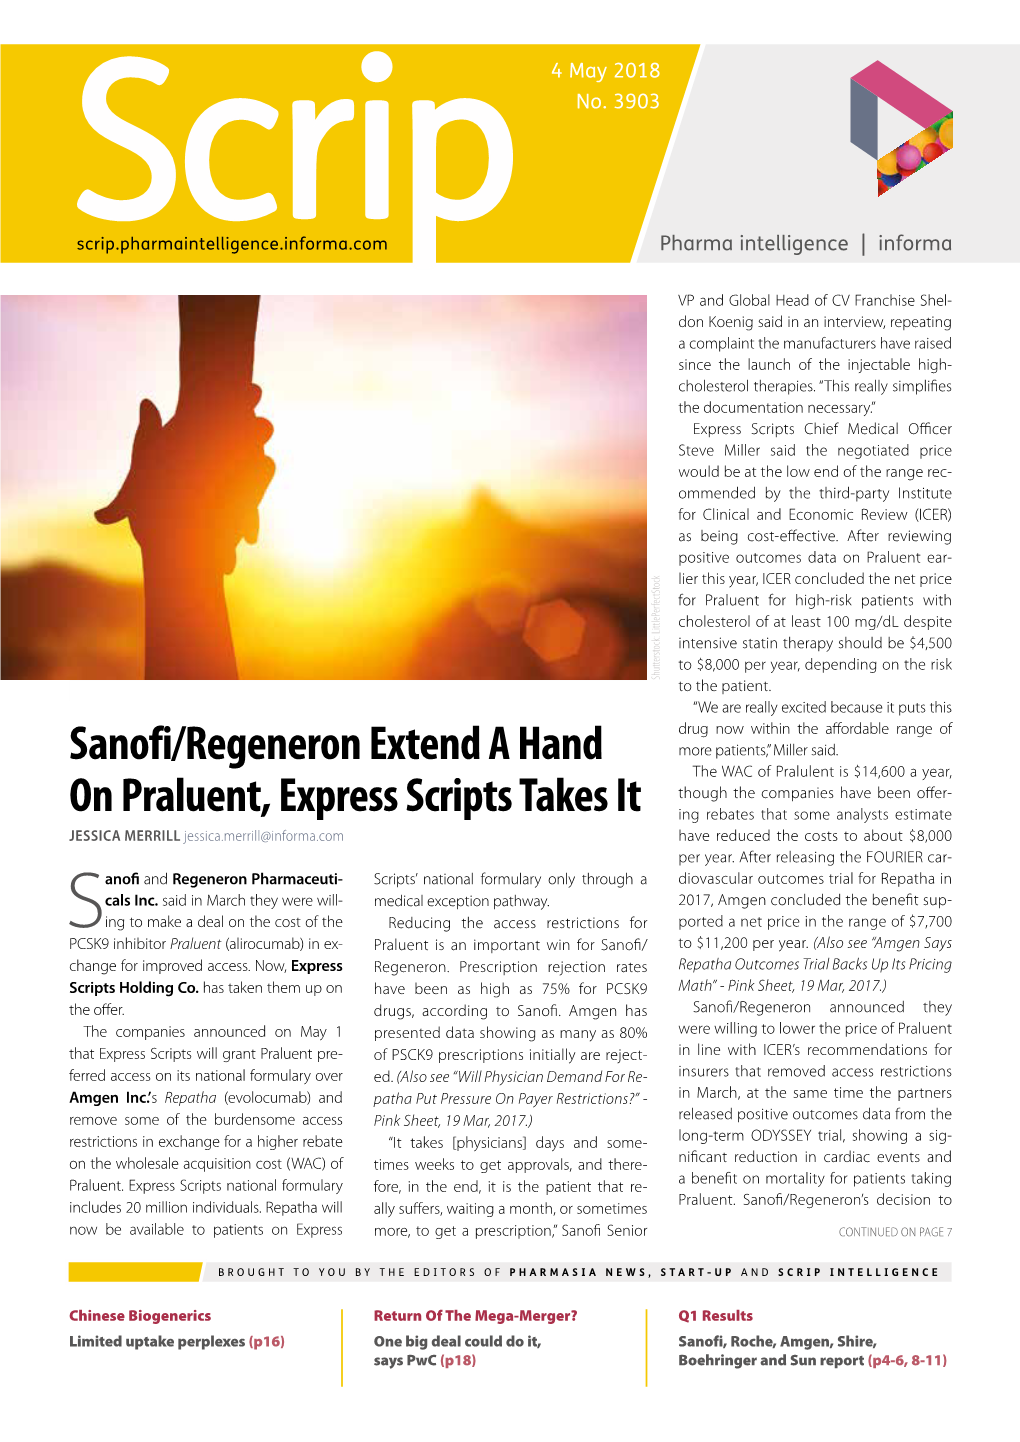 Sanofi/Regeneron Extend a Hand on Praluent, Express Scripts Takes It